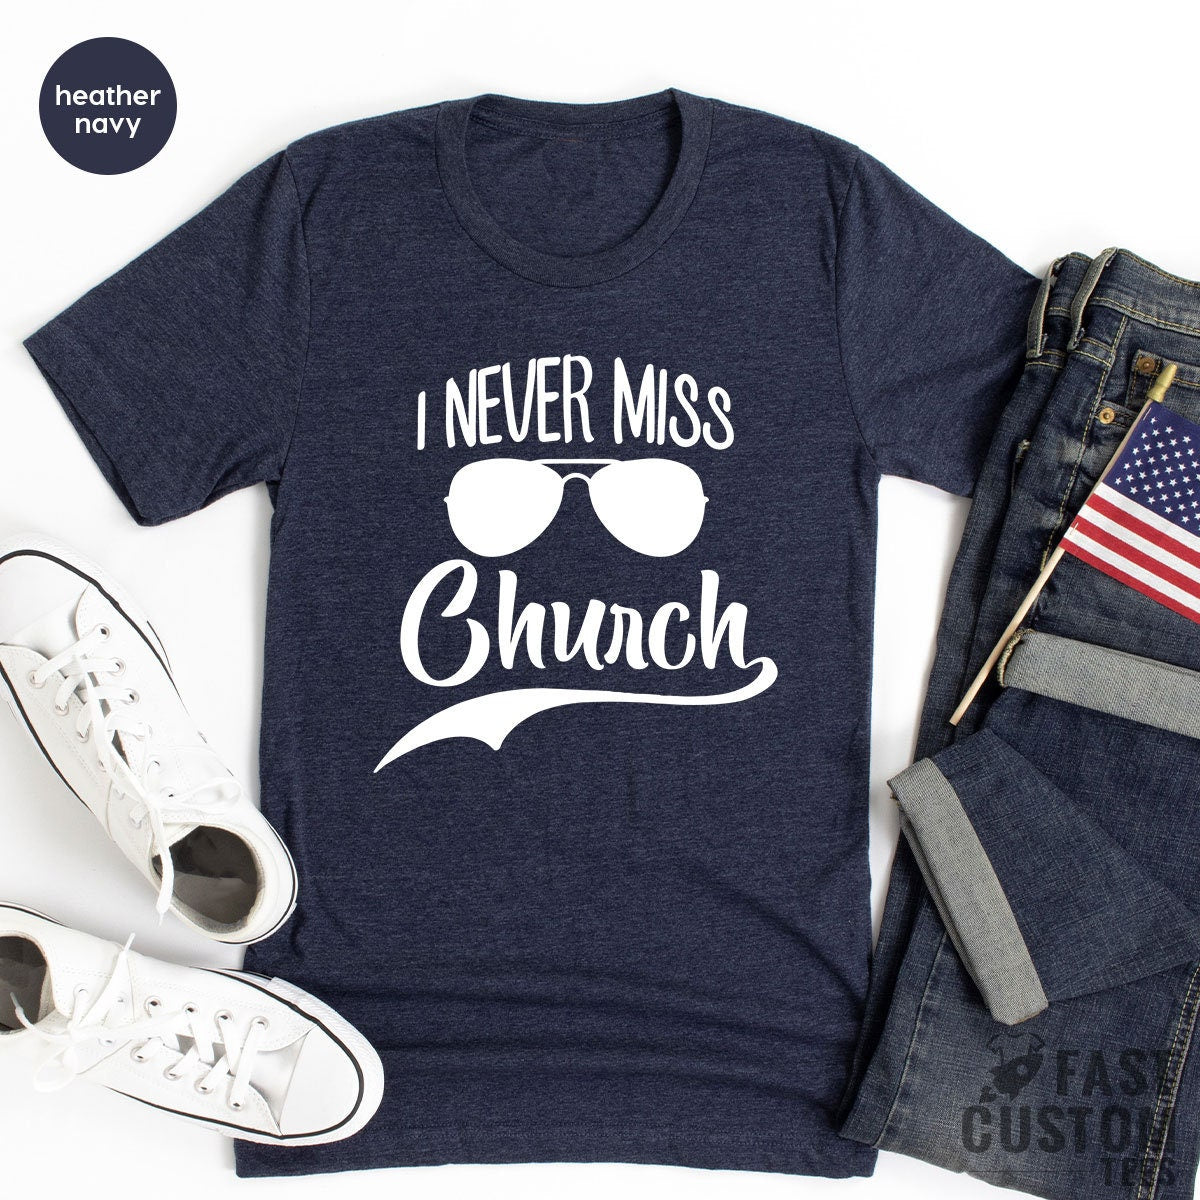 Funny Christian Shirt, Religious Shirt, Funny Church Shirt, Prayer Gift, Gift For Prayer, I Never Miss Church, Faith Shirt, Grace Shirt - Fastdeliverytees.com